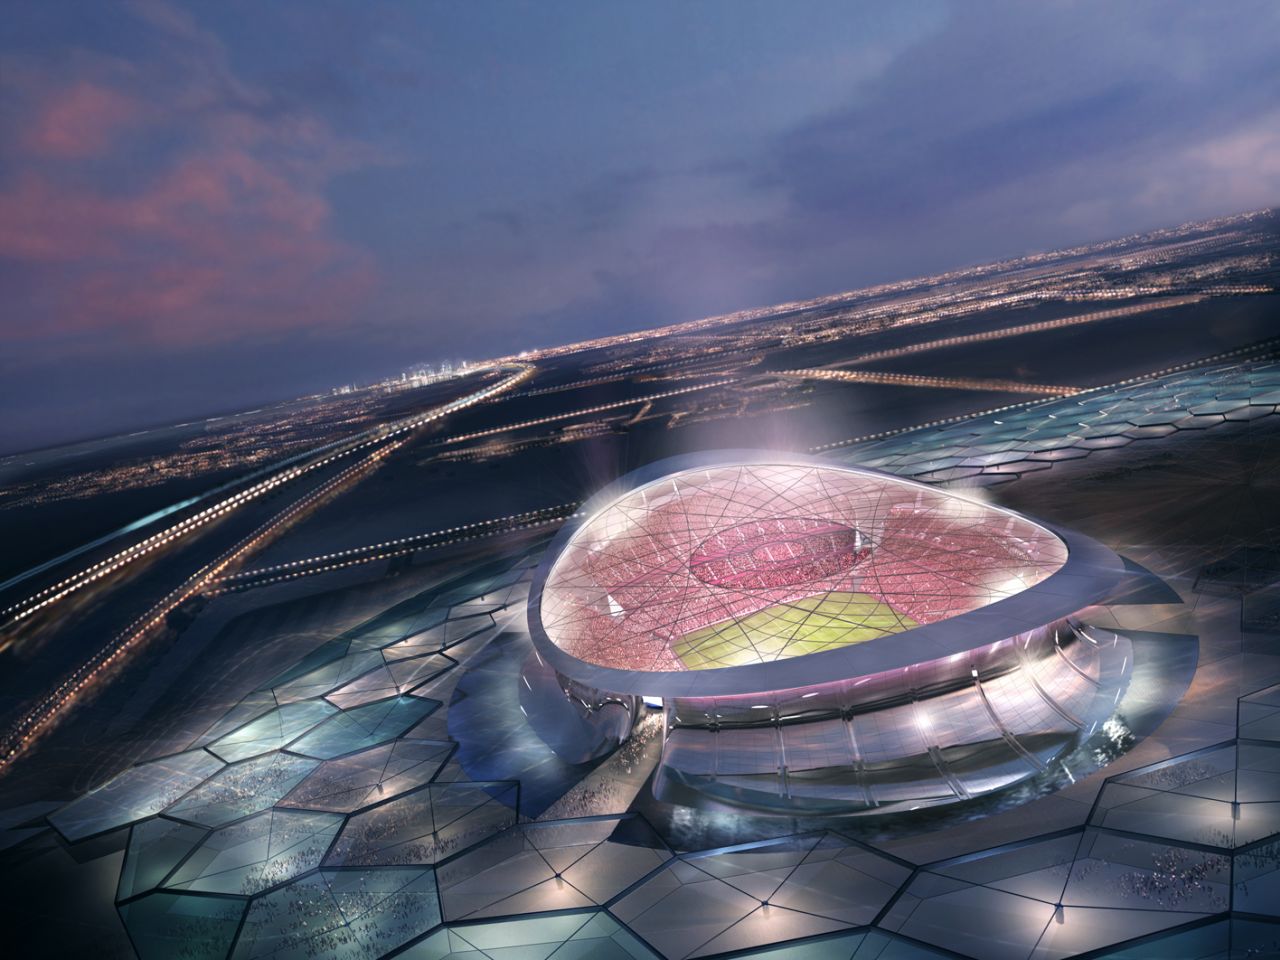 Take a tour of the Qatar 2022 World Cup stadiums | CNN